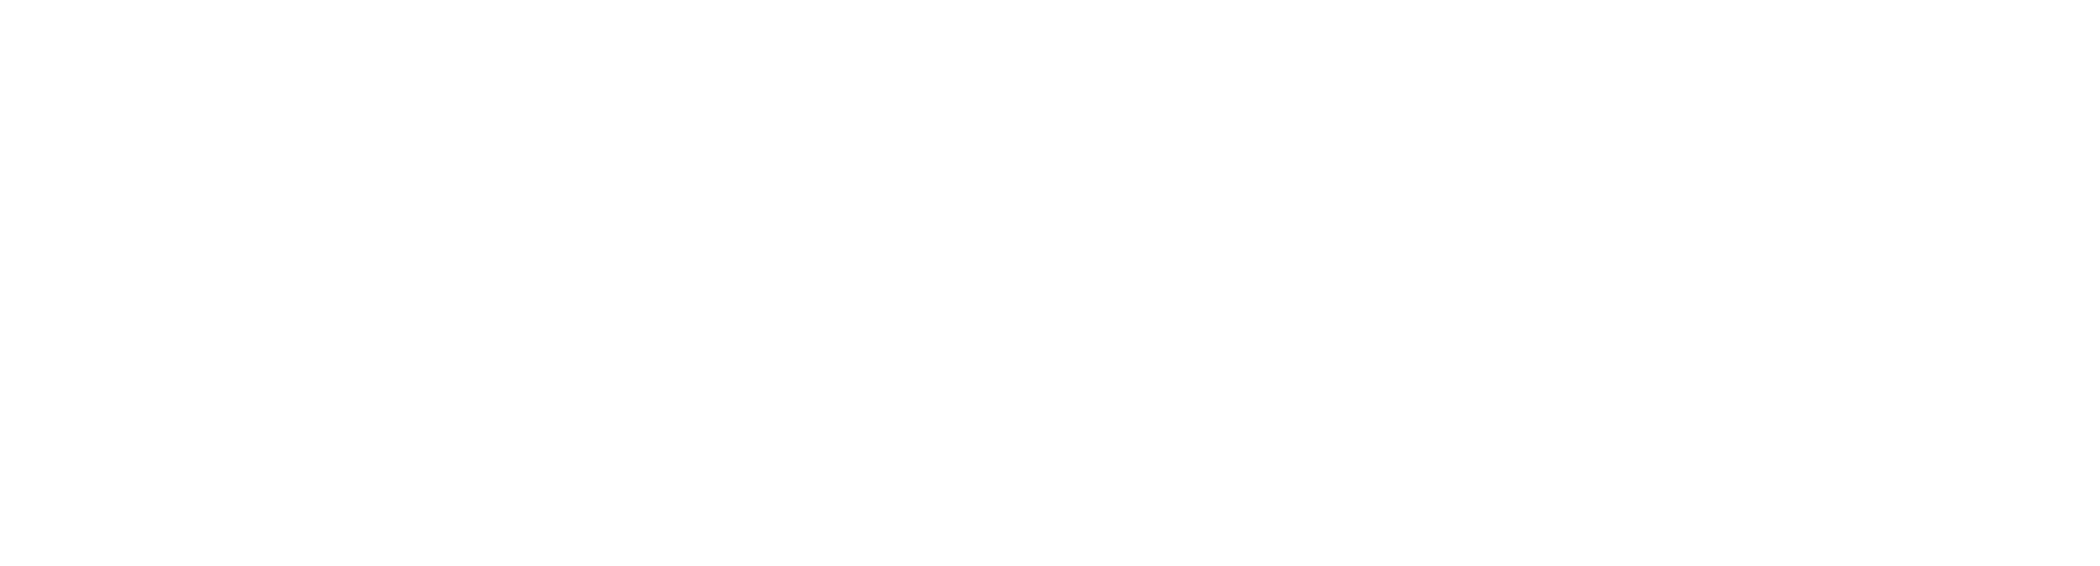 GfdB Gesellschaft für digitale Bildung